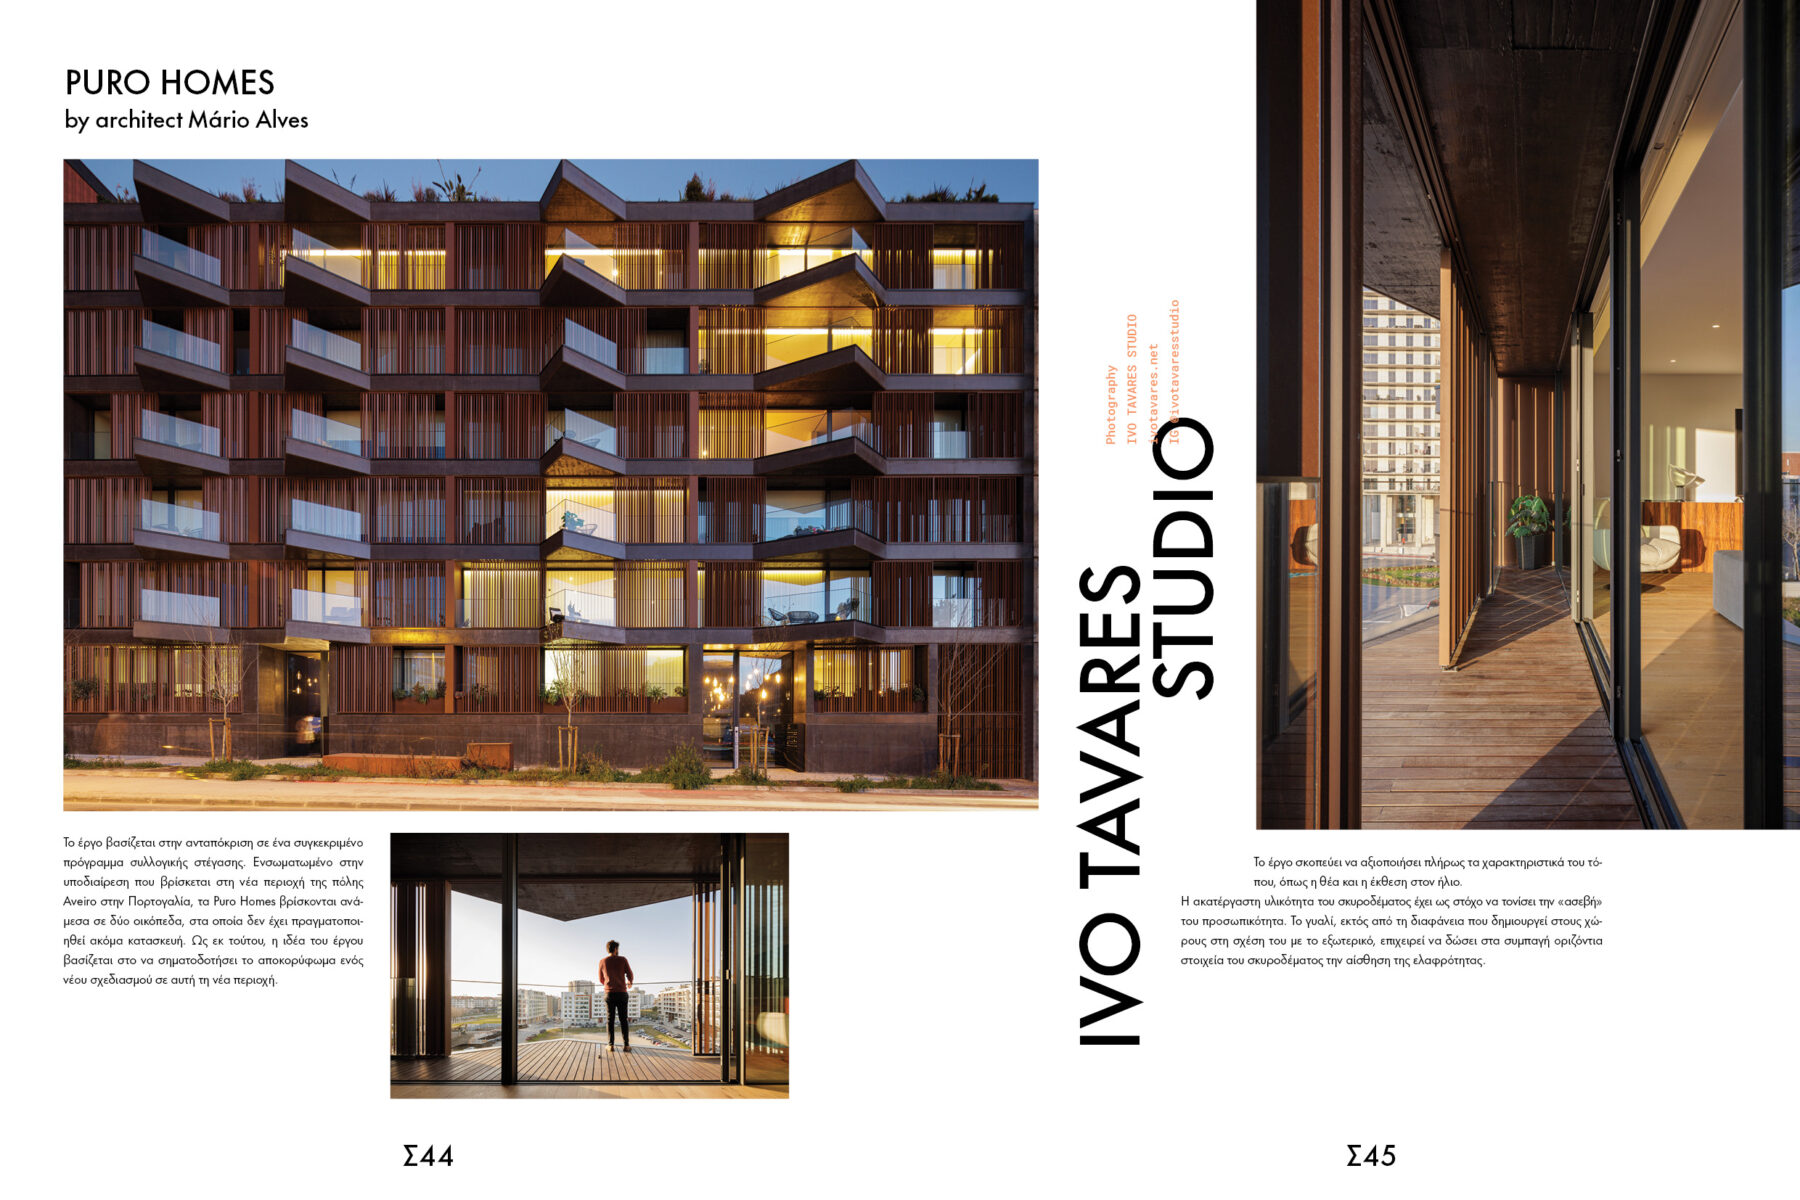 Baptista Magazine Oct 22 do atelier Inception Architects Studio com fotografia arquitetura de ivo tavares studio - architectural photography